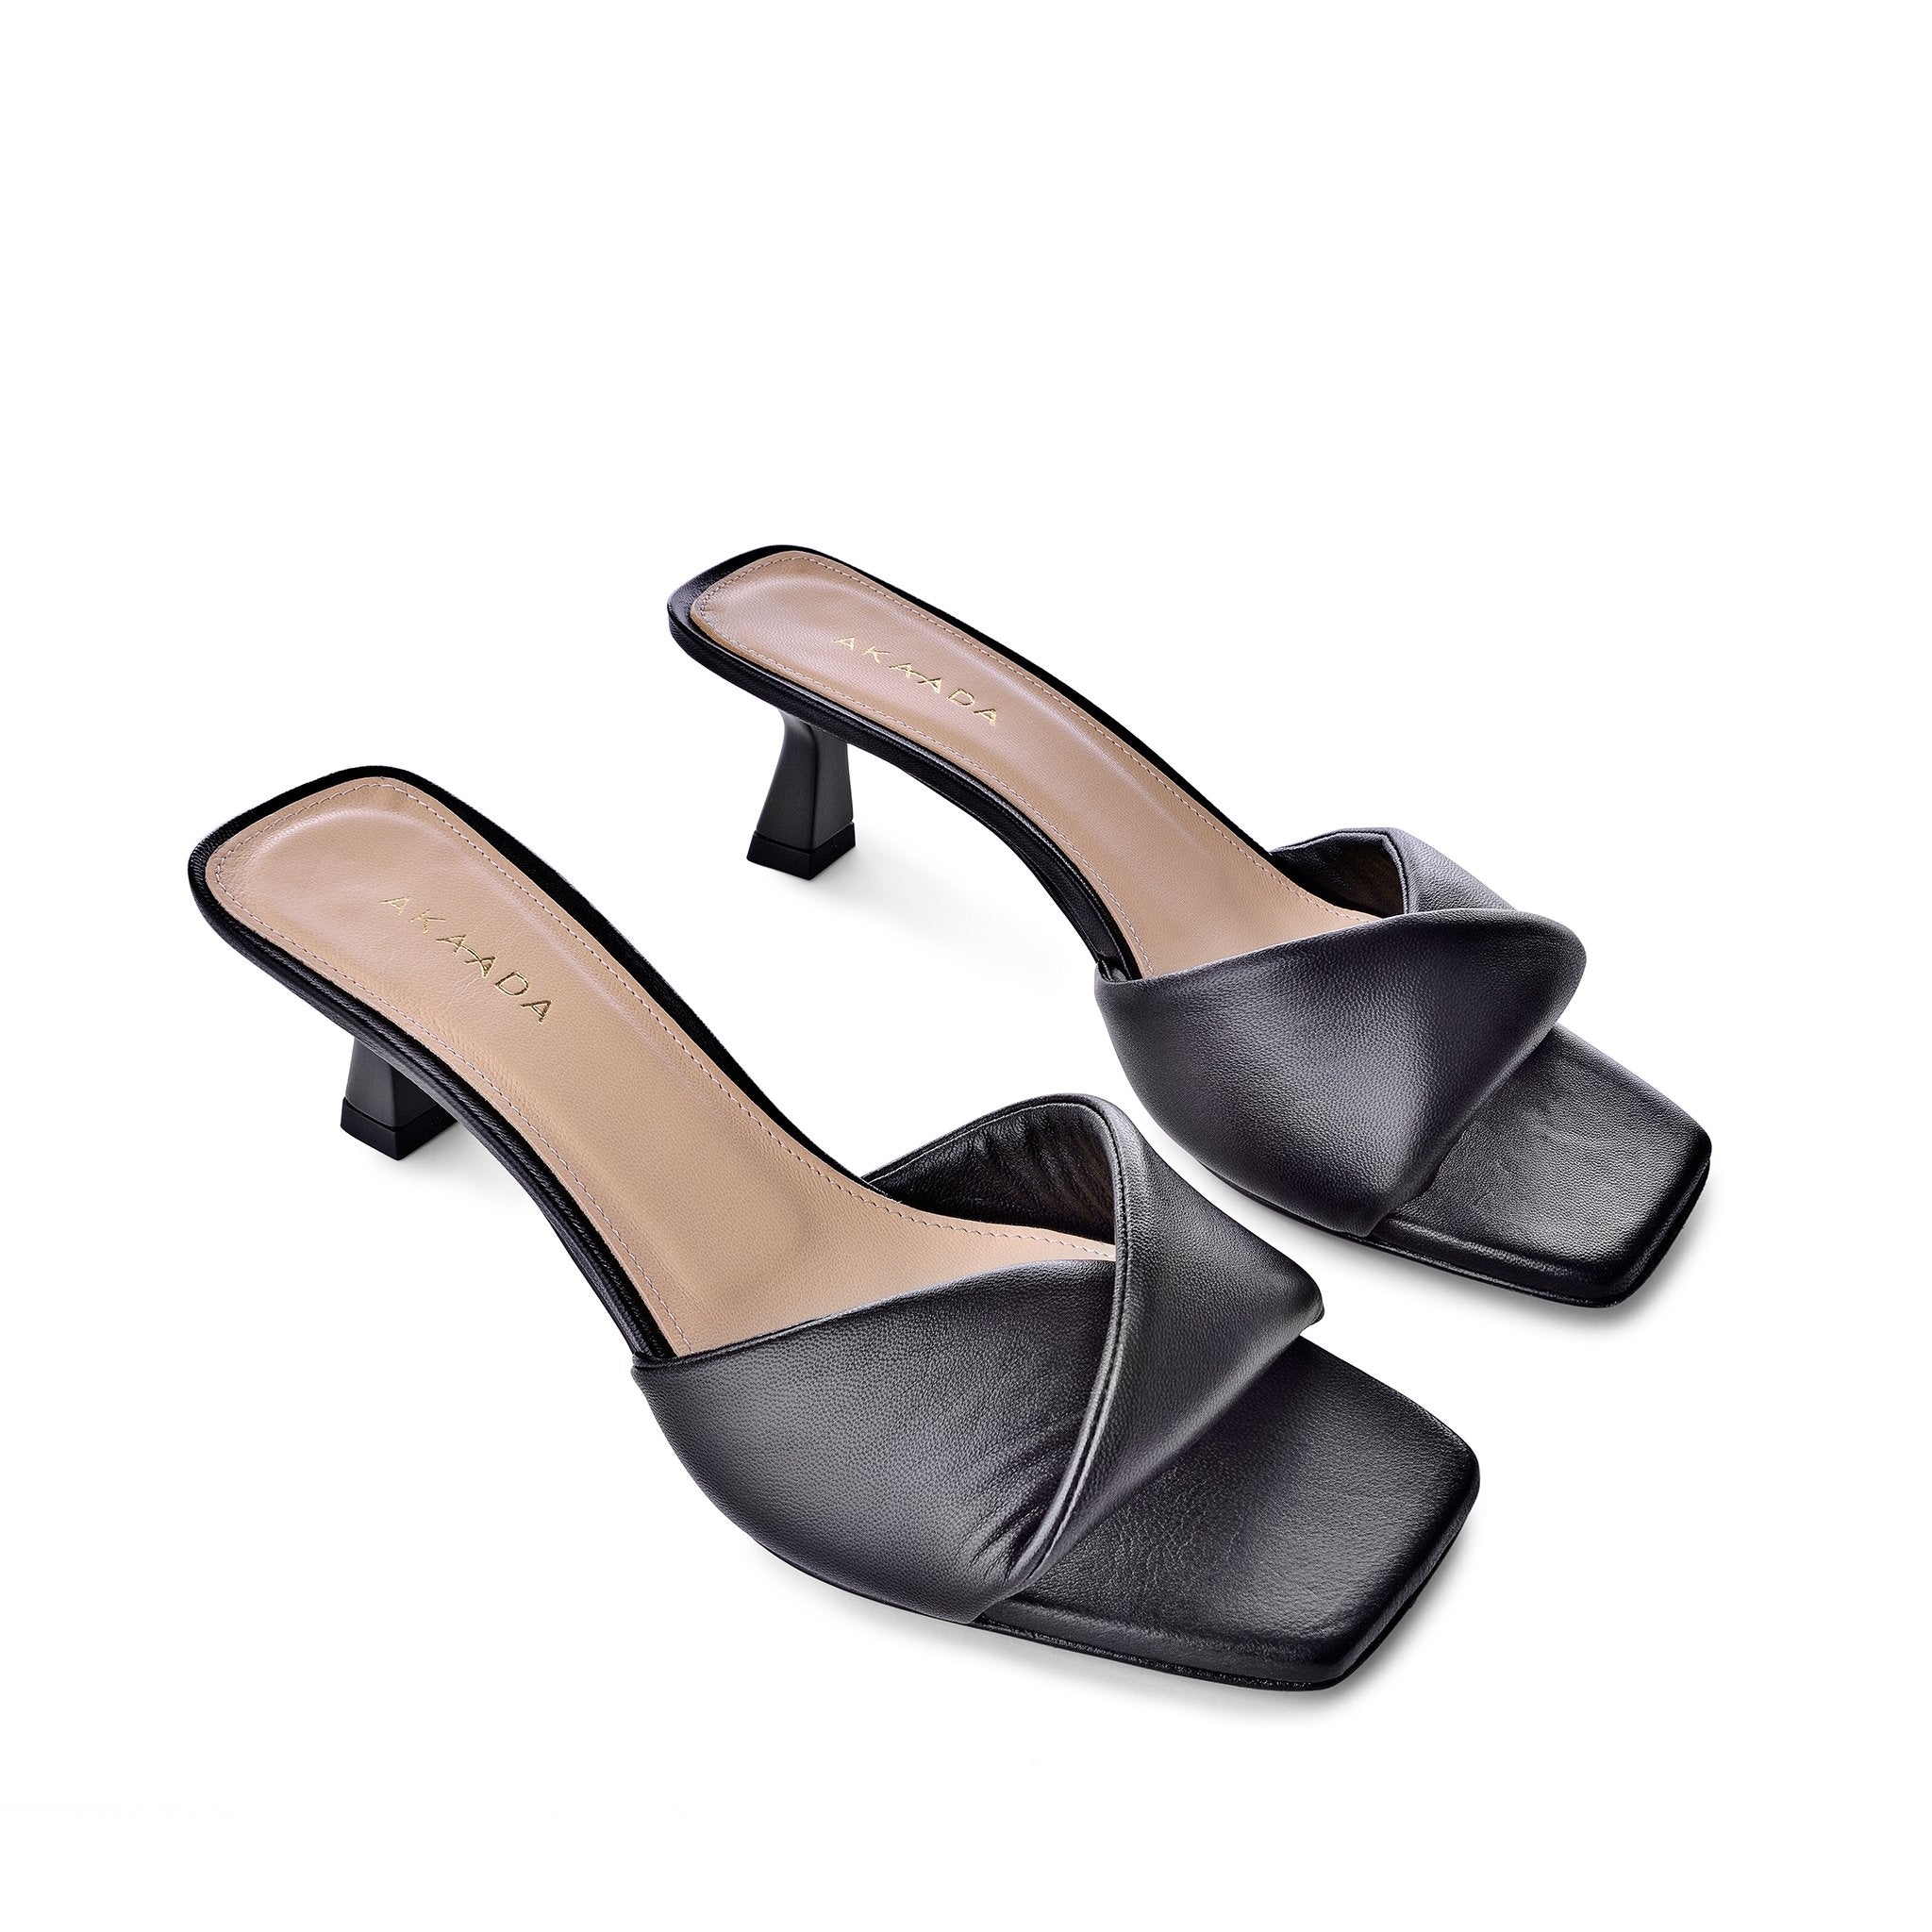 Haya Black Soft Leather Sandals 1413-02 - 5